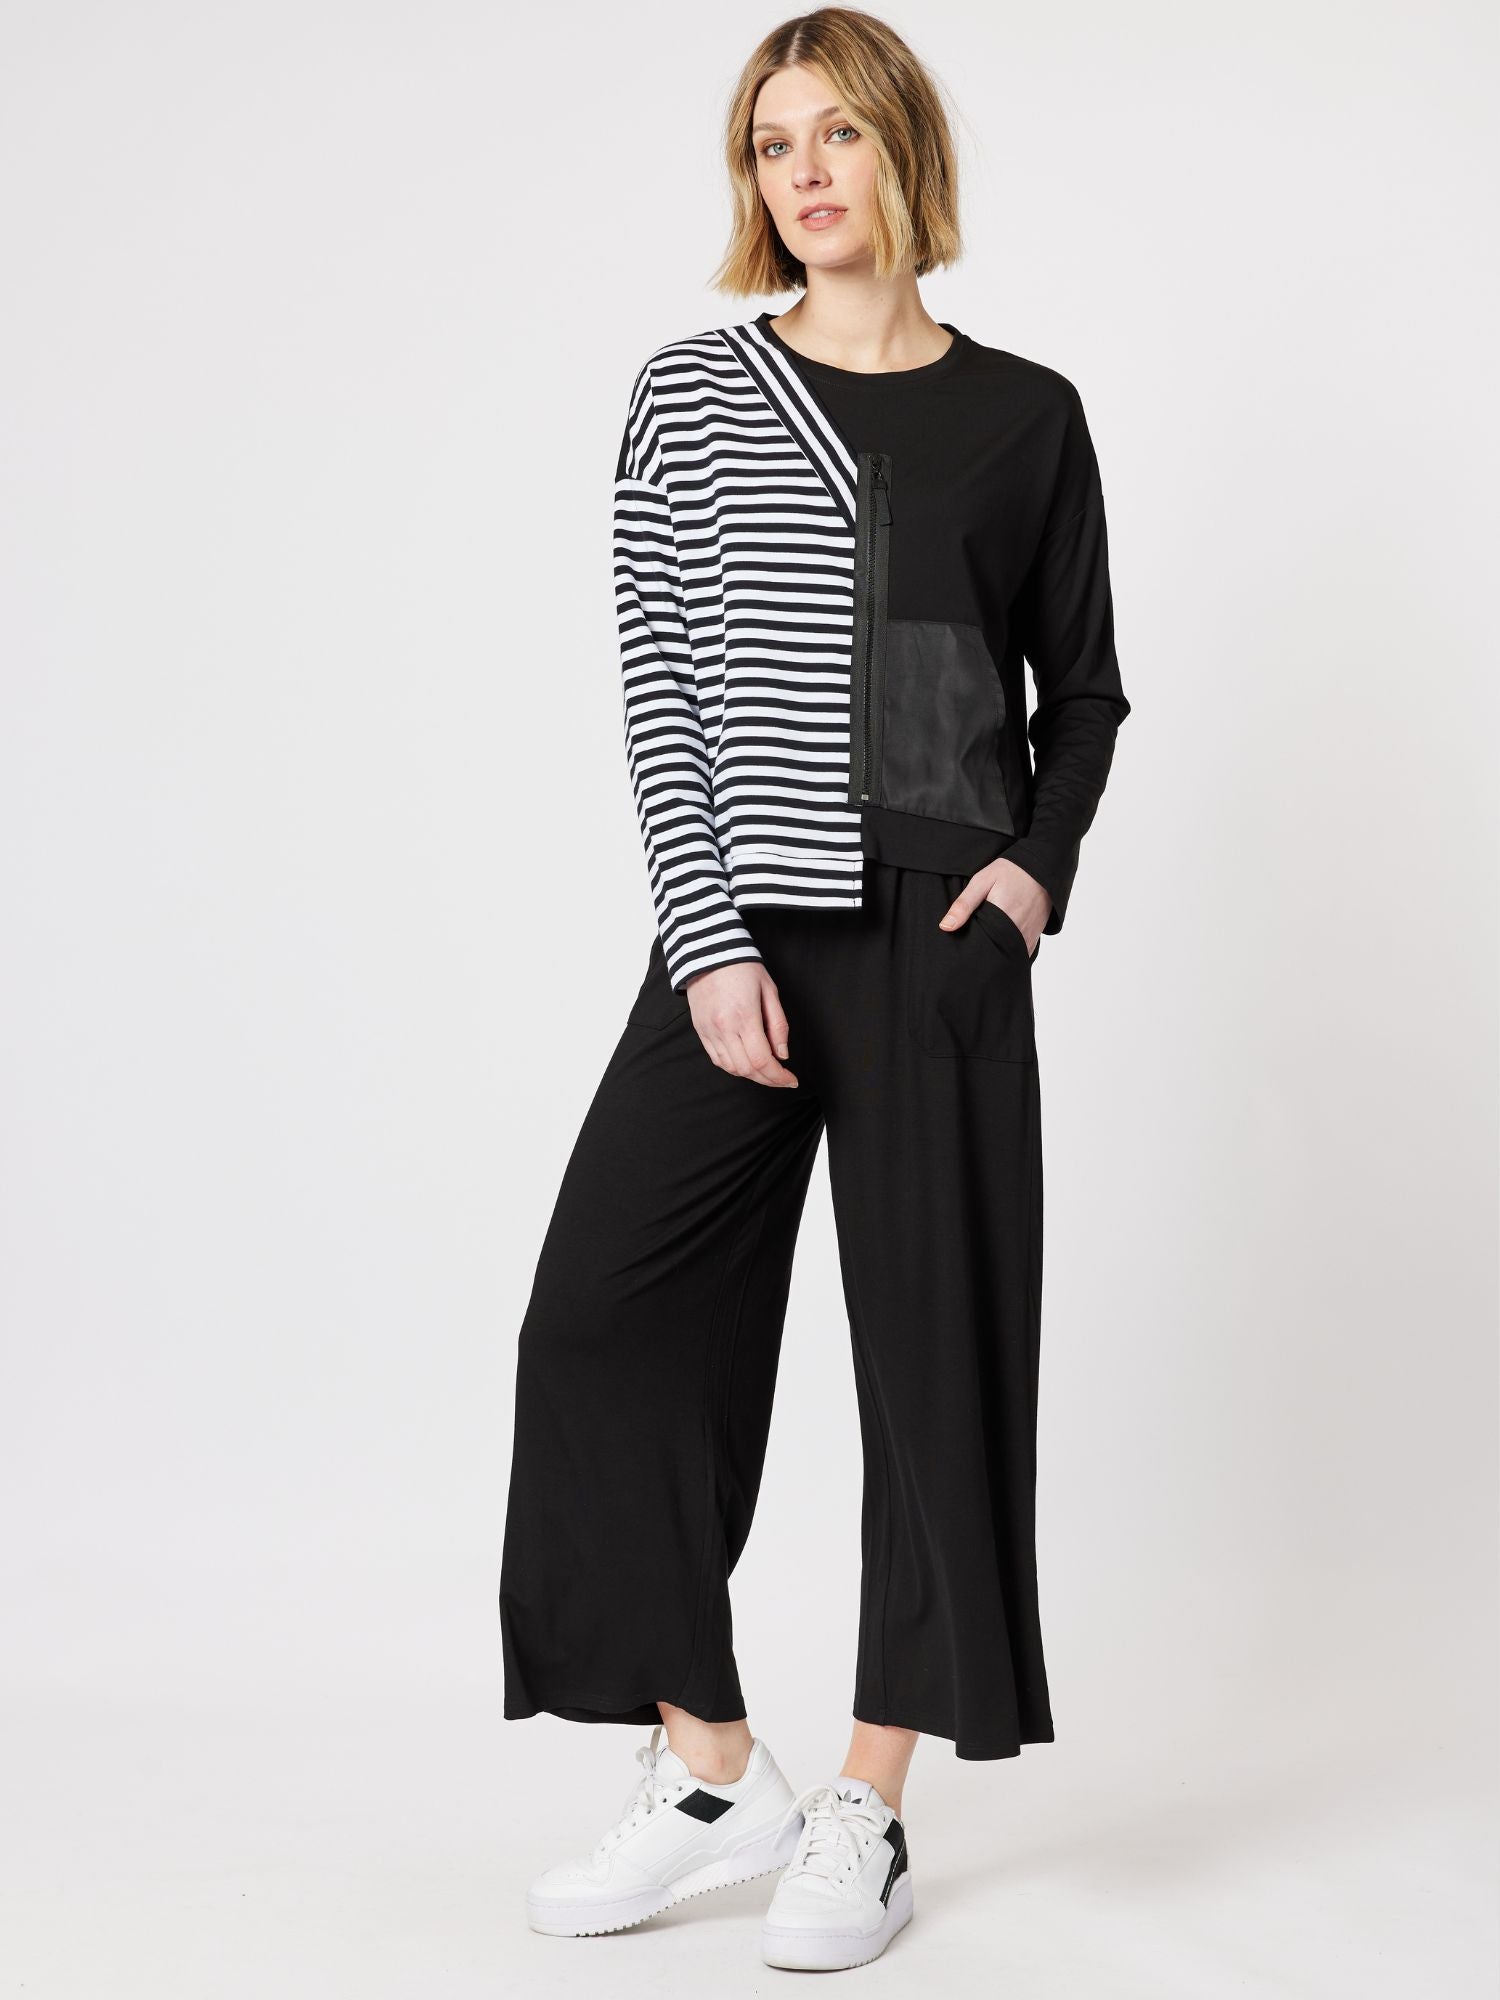 Spliced Stripe Sweatshirt - Black/White